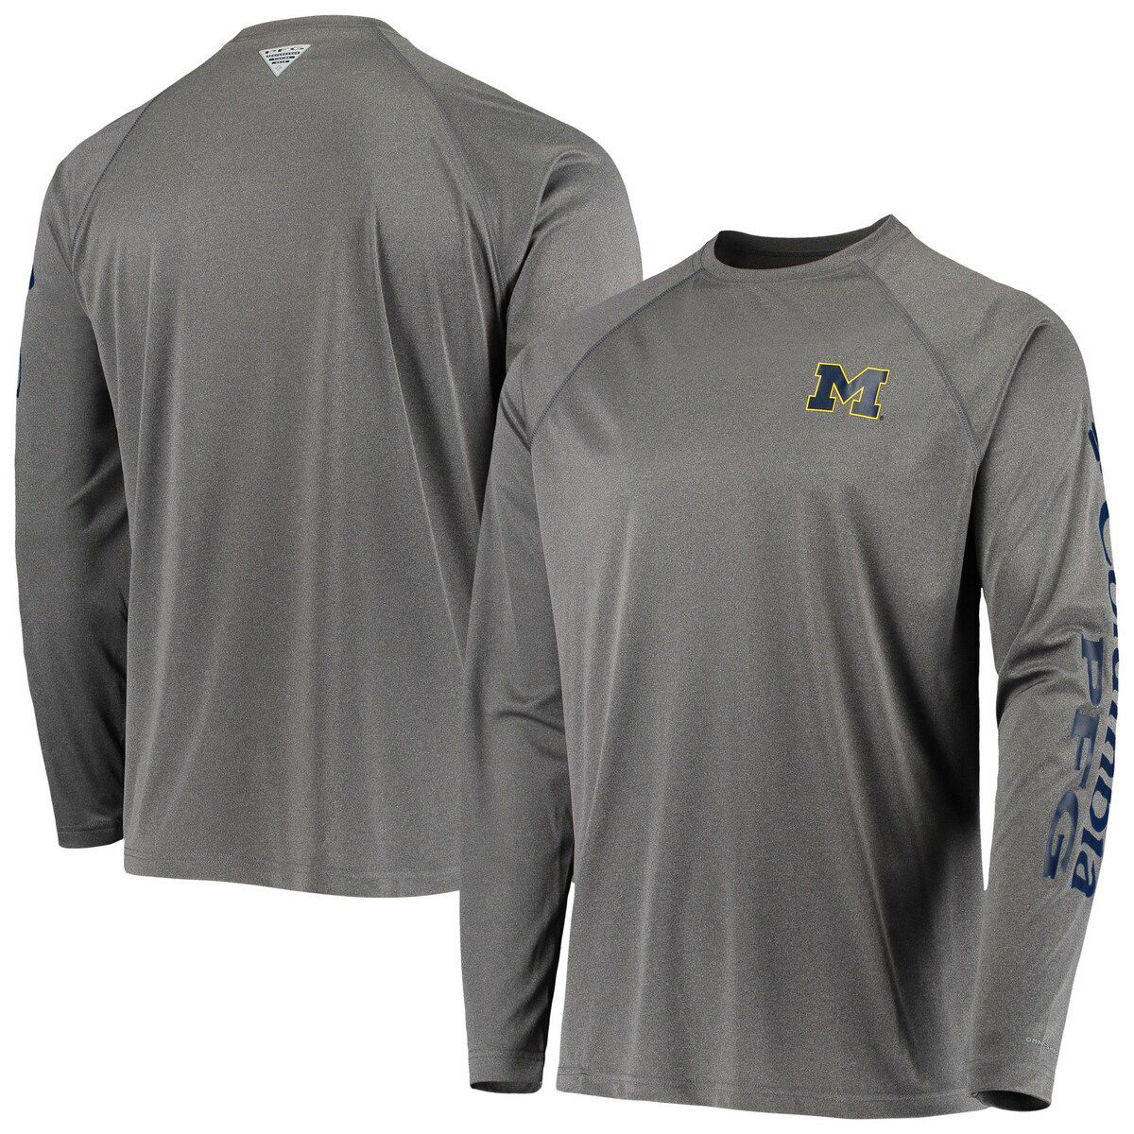 Columbia Men's Charcoal Michigan Wolverines Terminal Tackle Omni-Shade Raglan Long Sleeve T-Shirt - Image 2 of 4